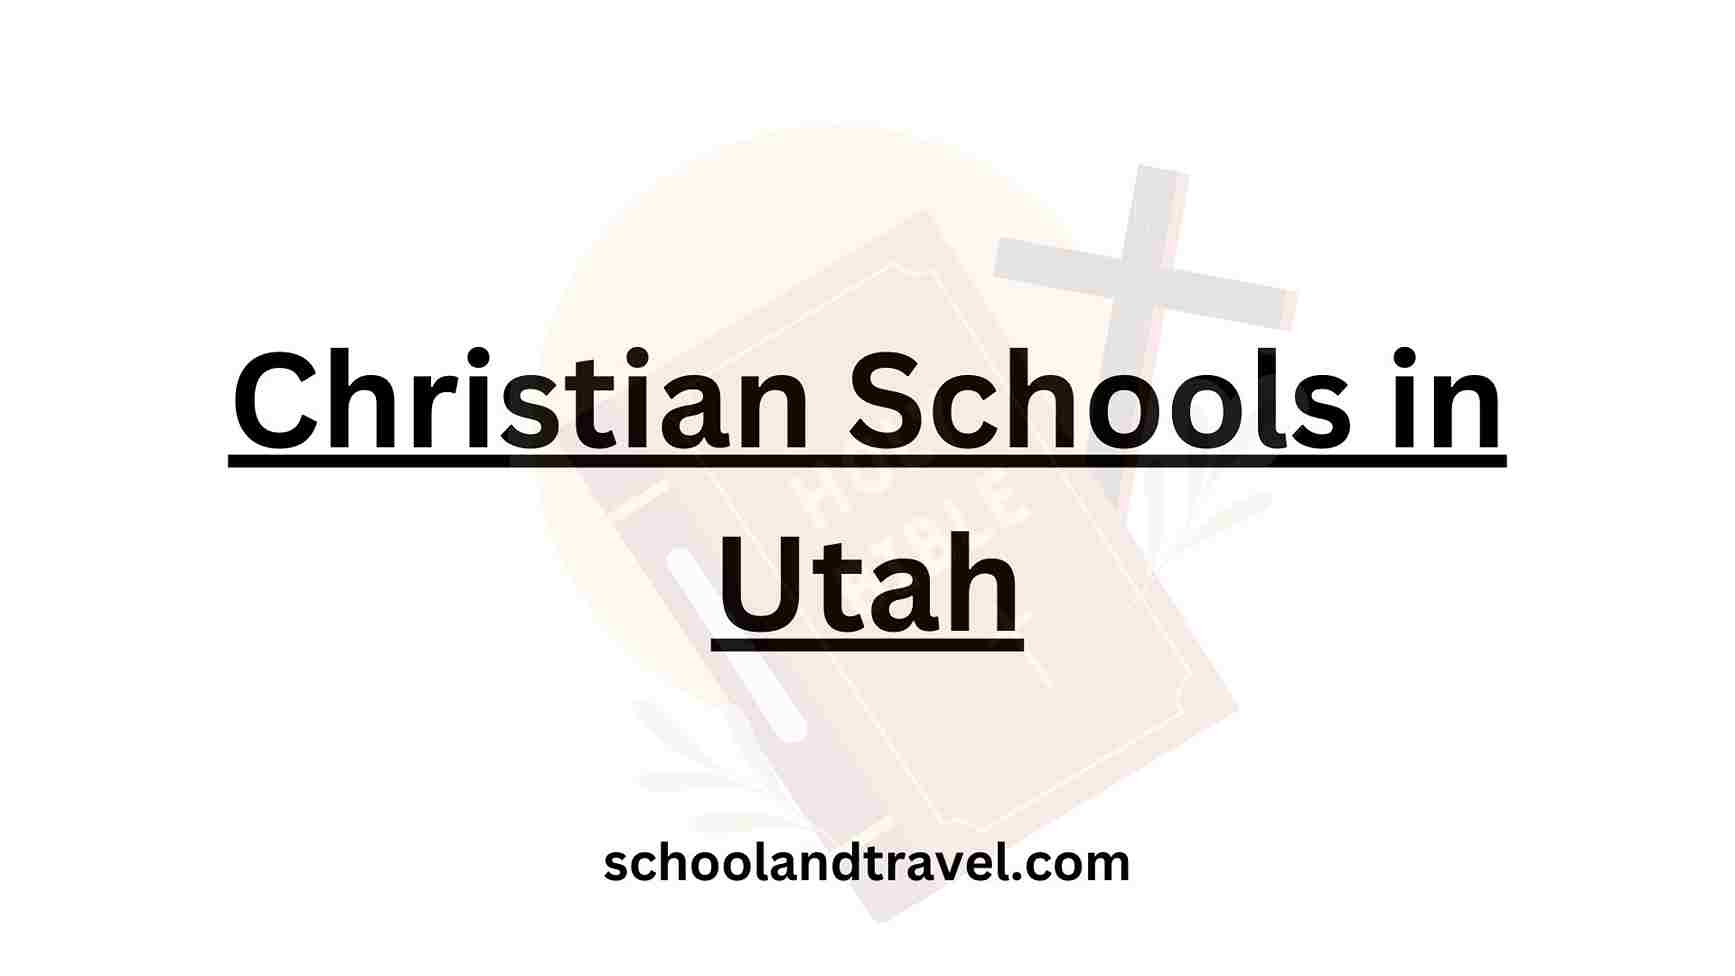 Christian Schools in Utah